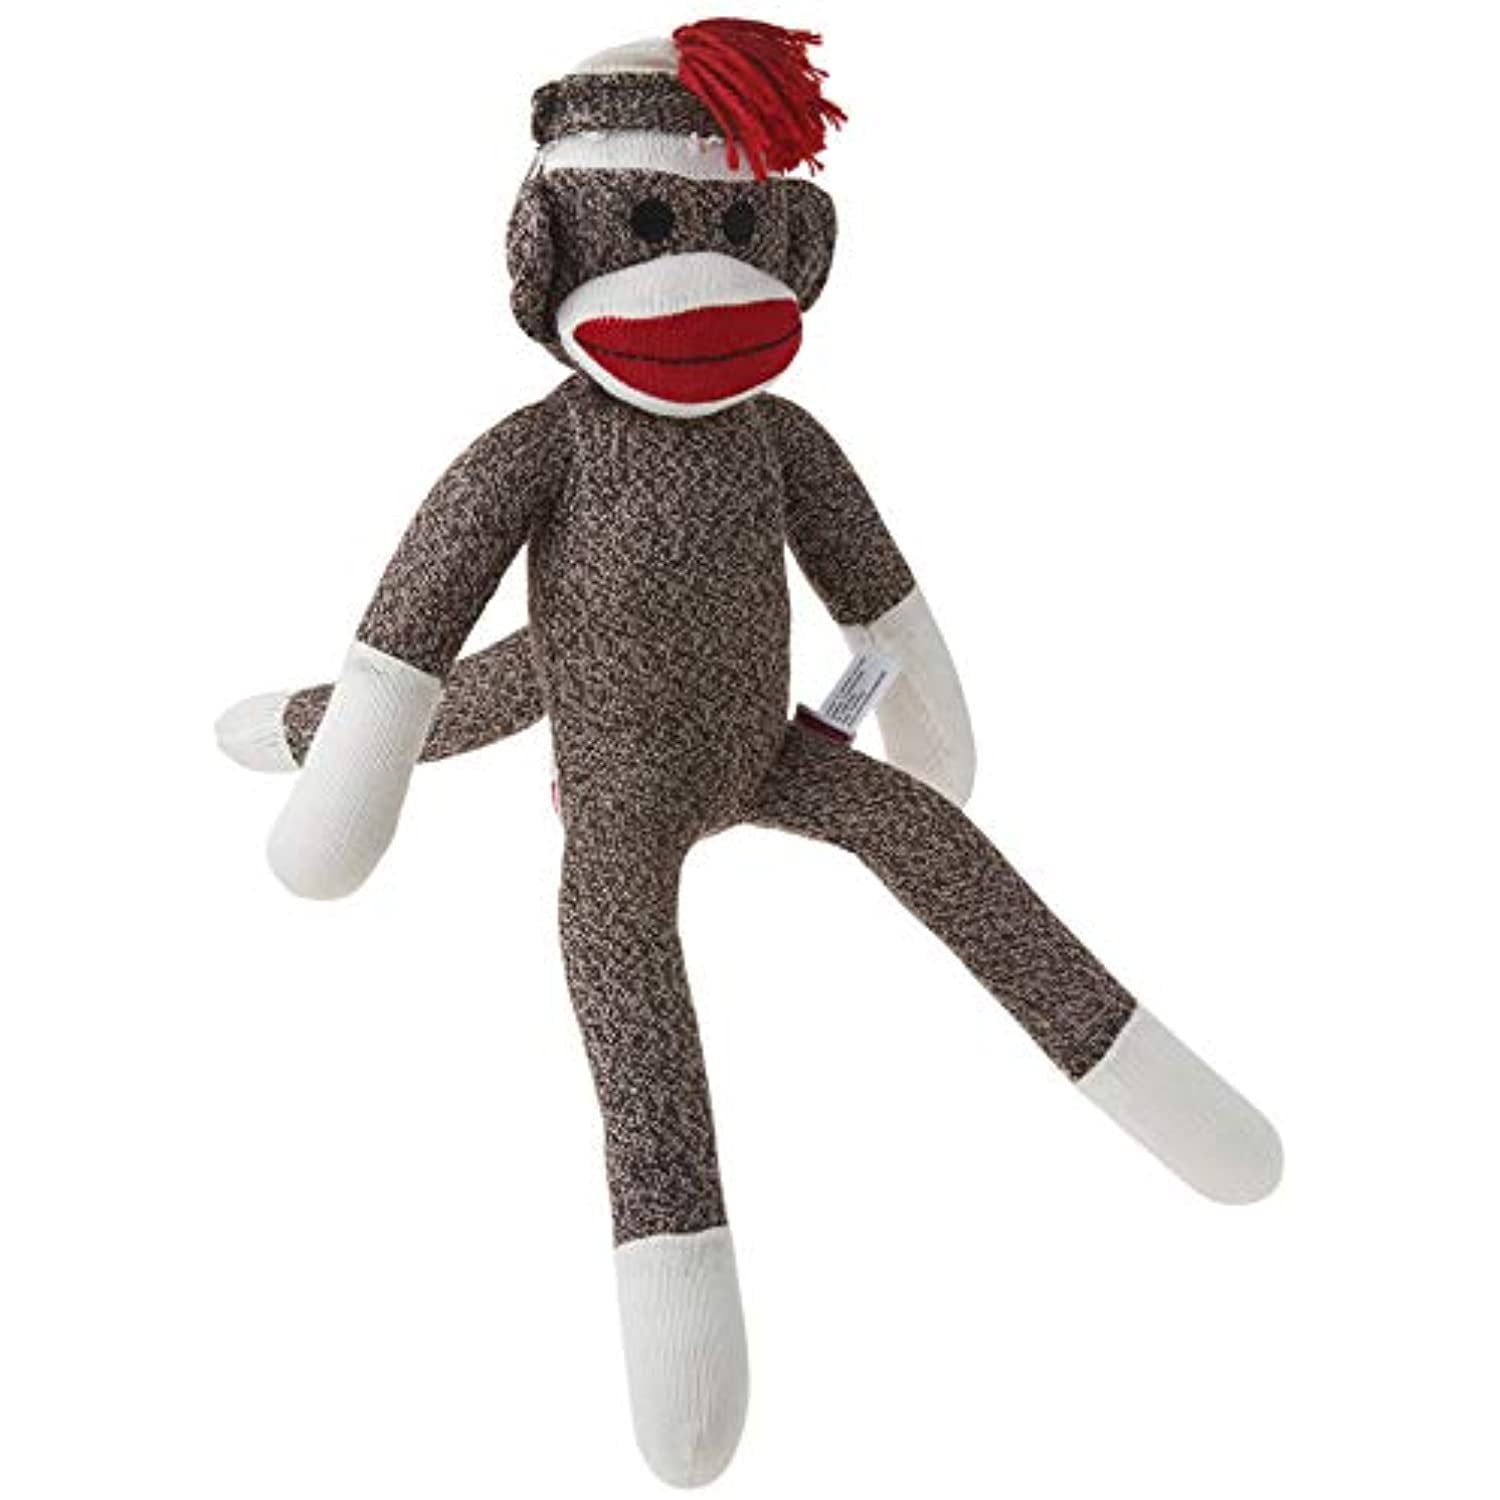 Original Sock Monkey Doll 20" Stuffed Plush Vintage Retro Animal Classic Toy 